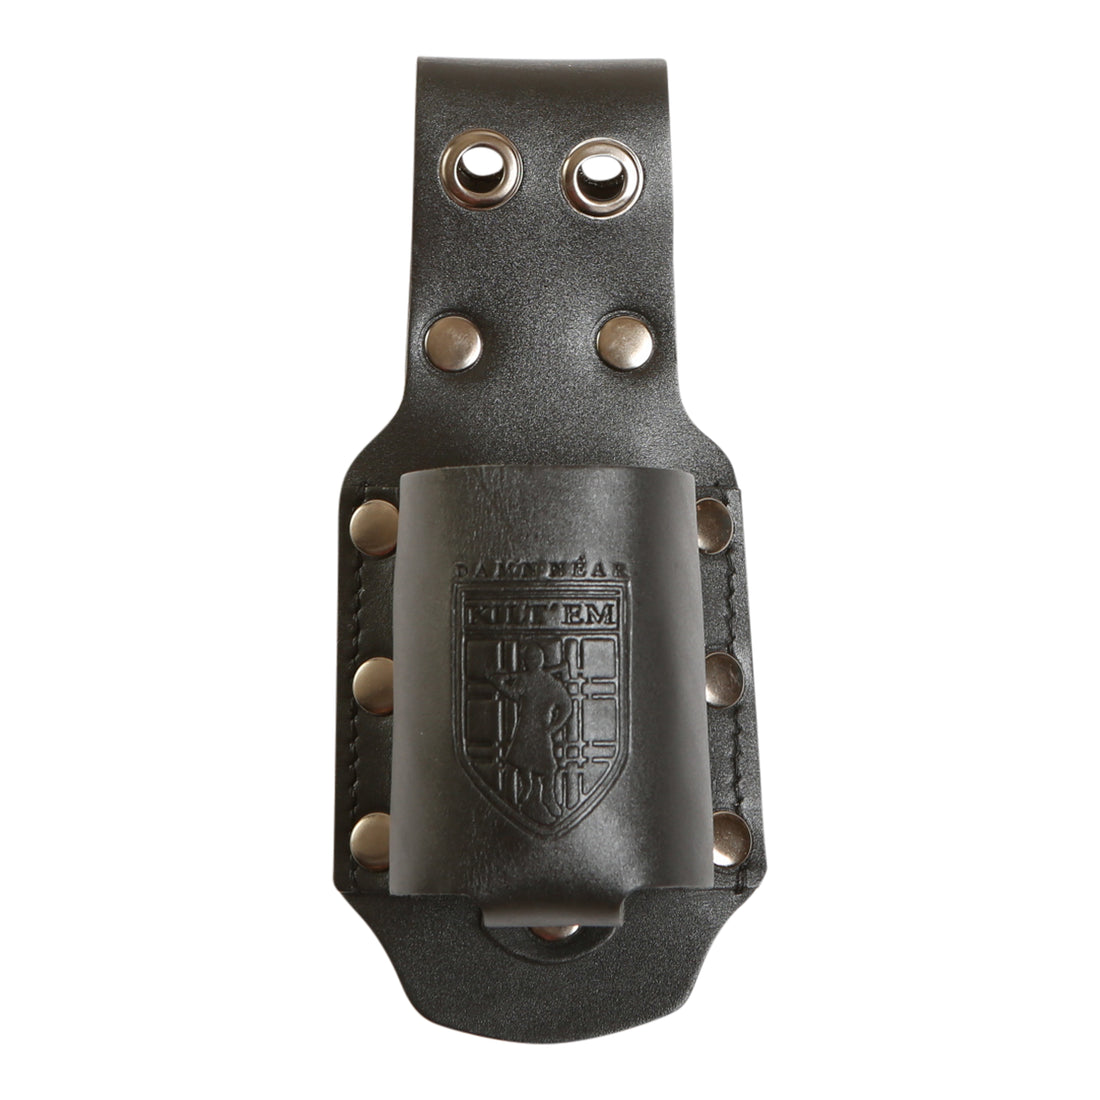 Leather Water Bottle Holder, for Wide Kilt Belt, Festival Gear for Bagpipe  Pipers and Kilt Men, Birthday Gift for Men and Women